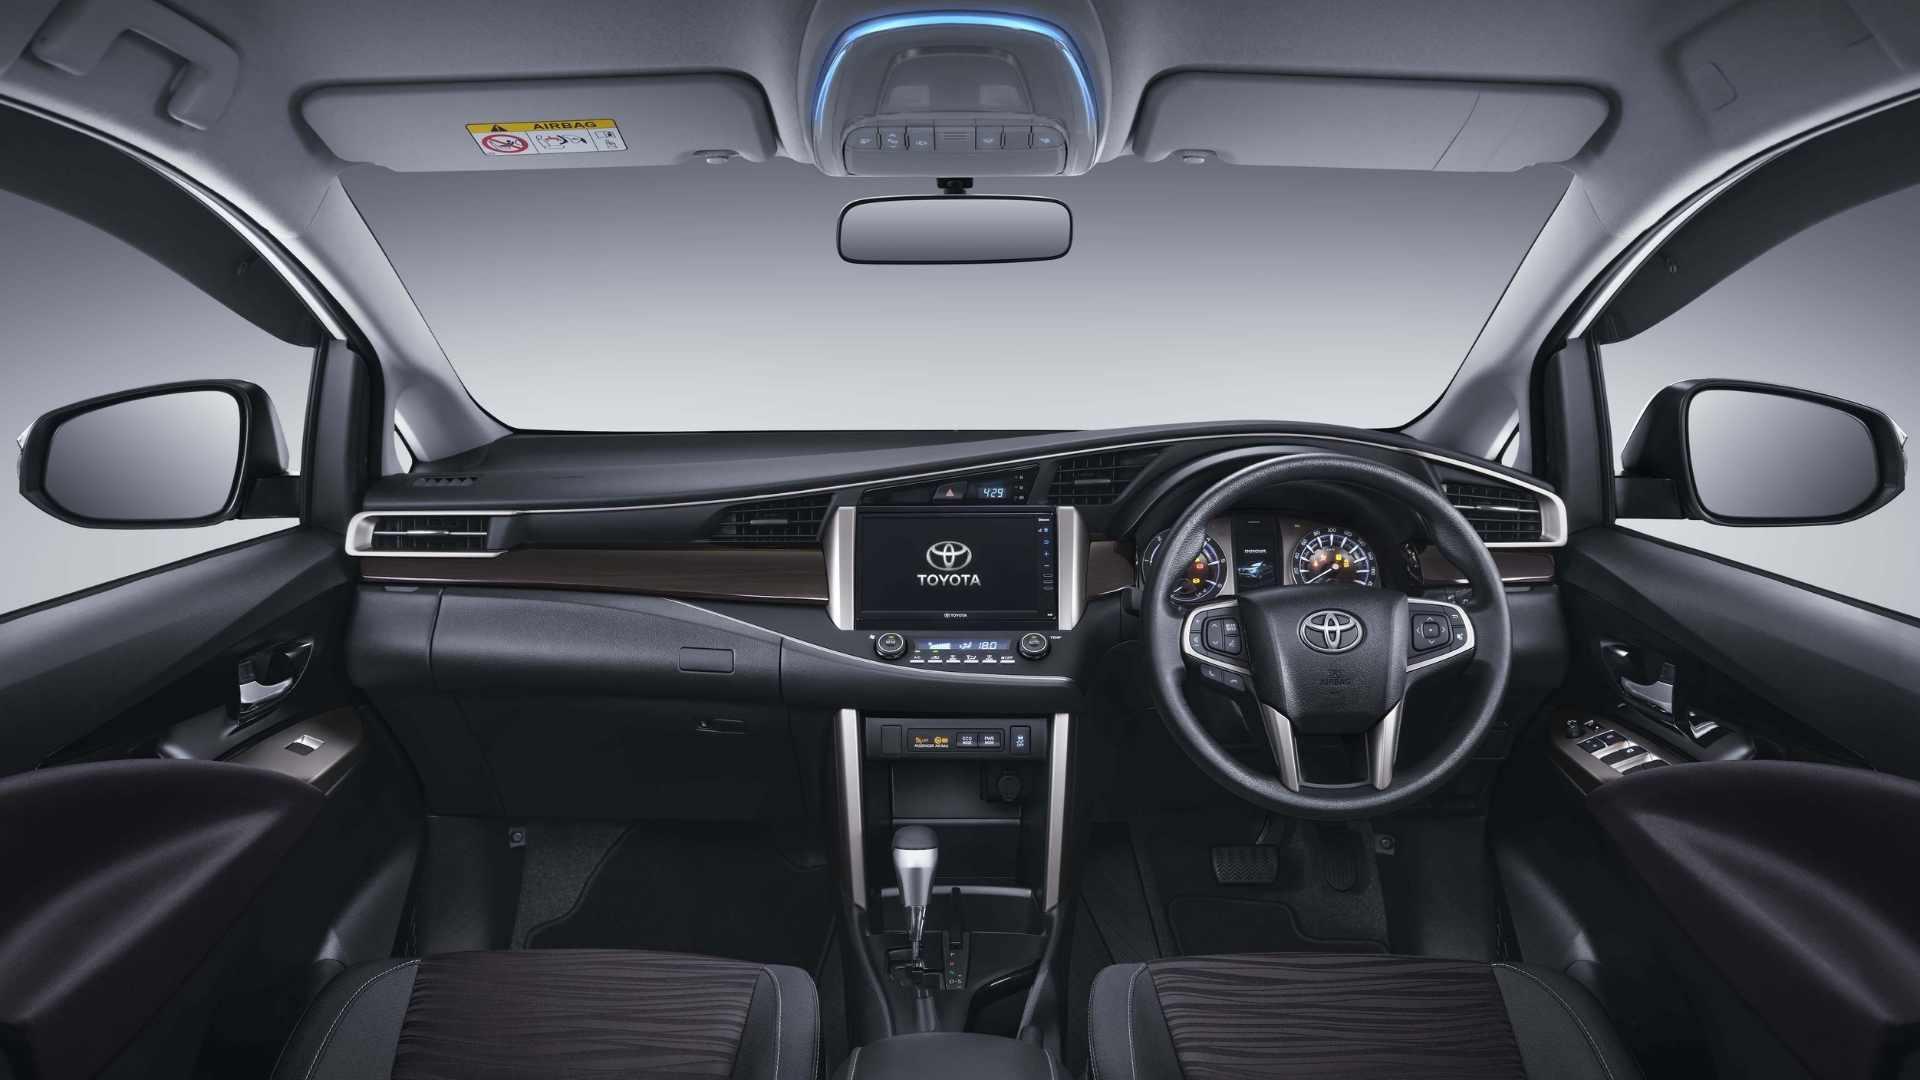 TRAC - MVP Car - Toyota Innova Interior 02.jpg